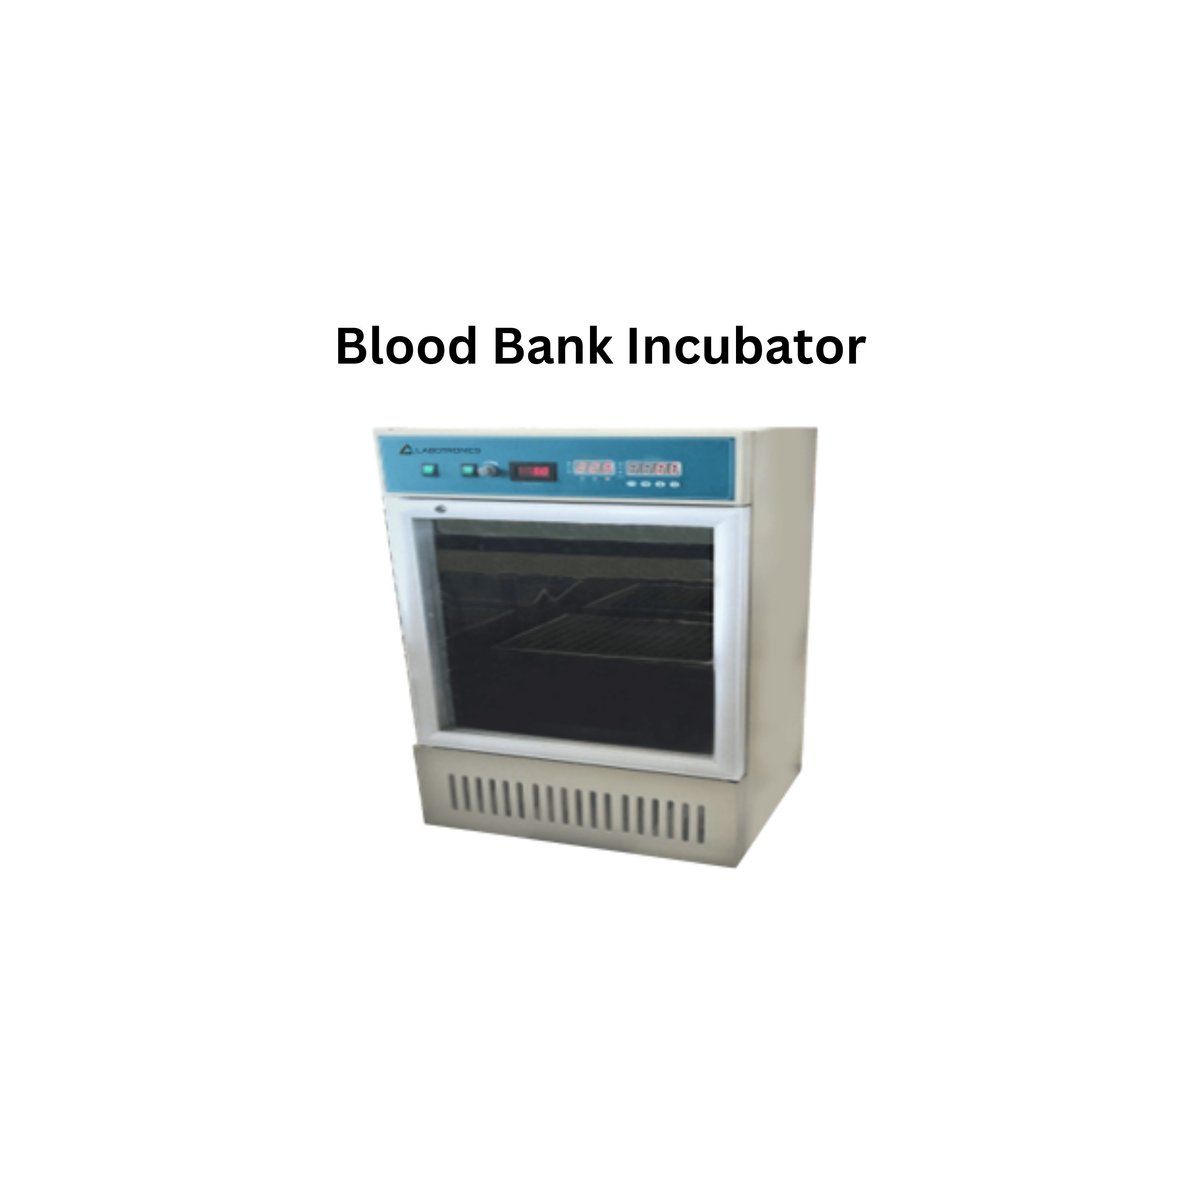 Blood Bank Incubator.jpg